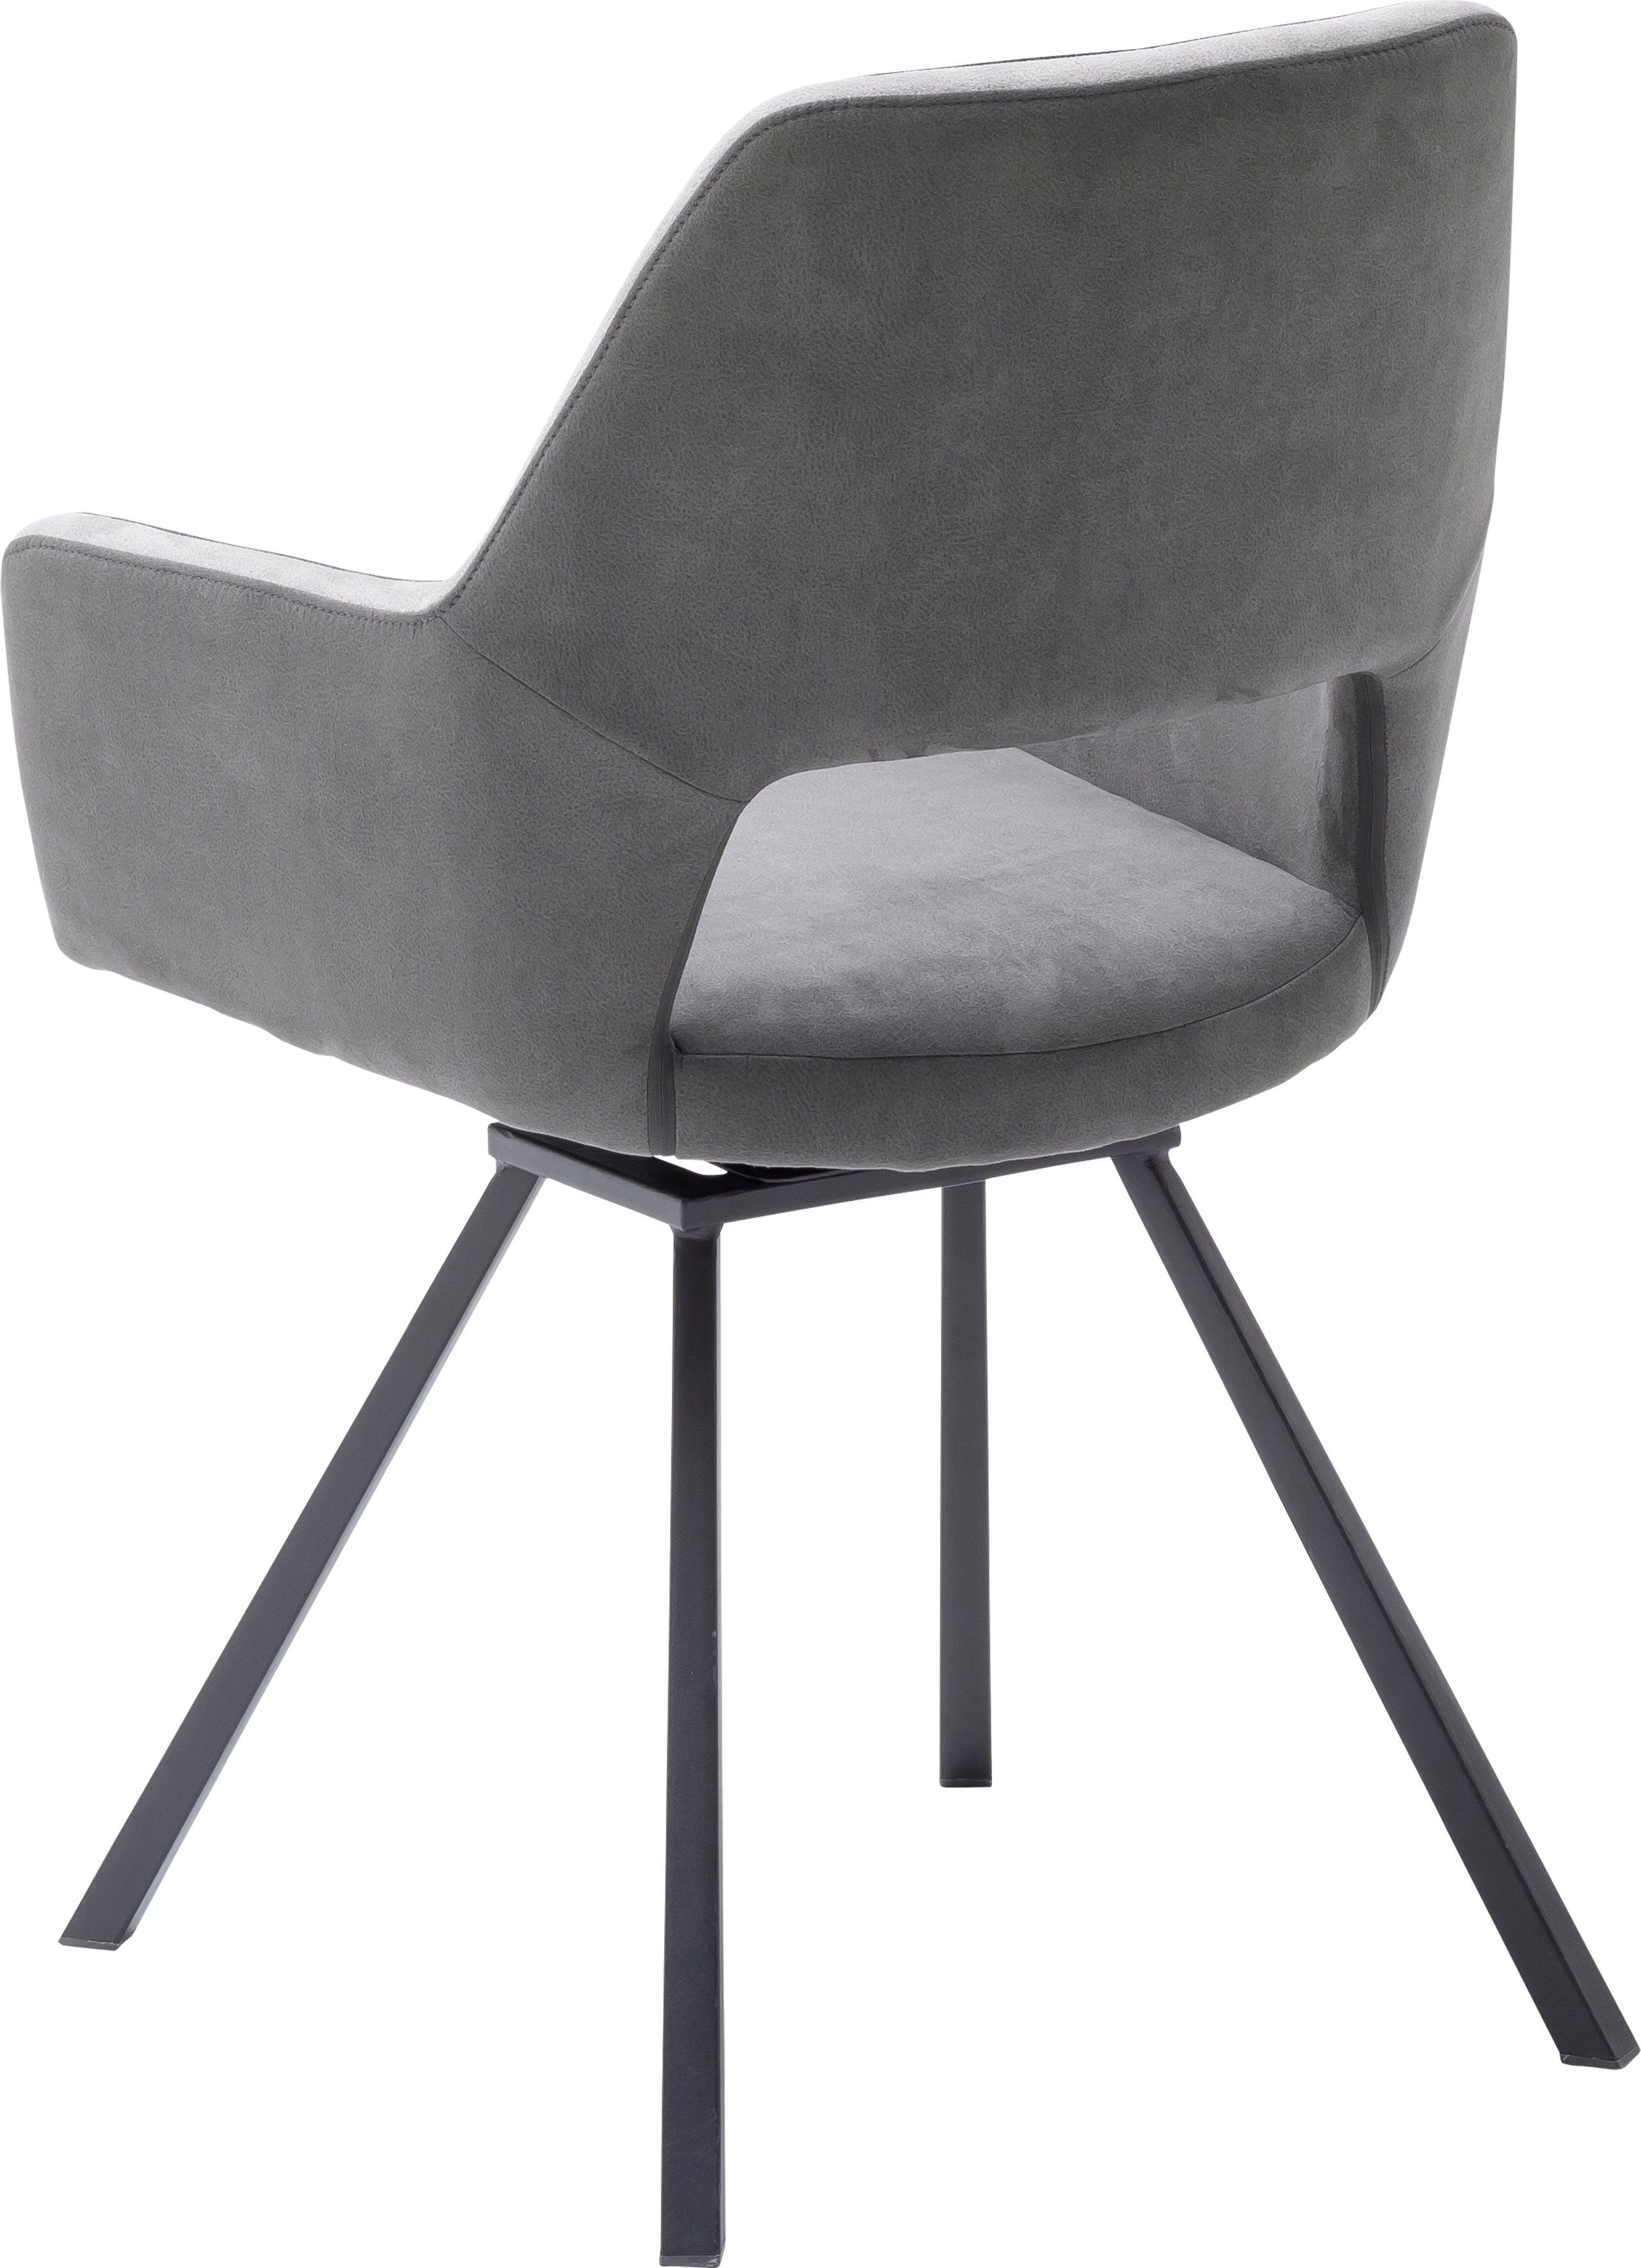 MCA Dunkelgrau-Grau Stuhl | 180°drehbar 120 Nivellierung, 2-er belastbar bis furniture St), (Set, Dunkelgrau 2 Bayonne Set, Esszimmerstuhl mit kg